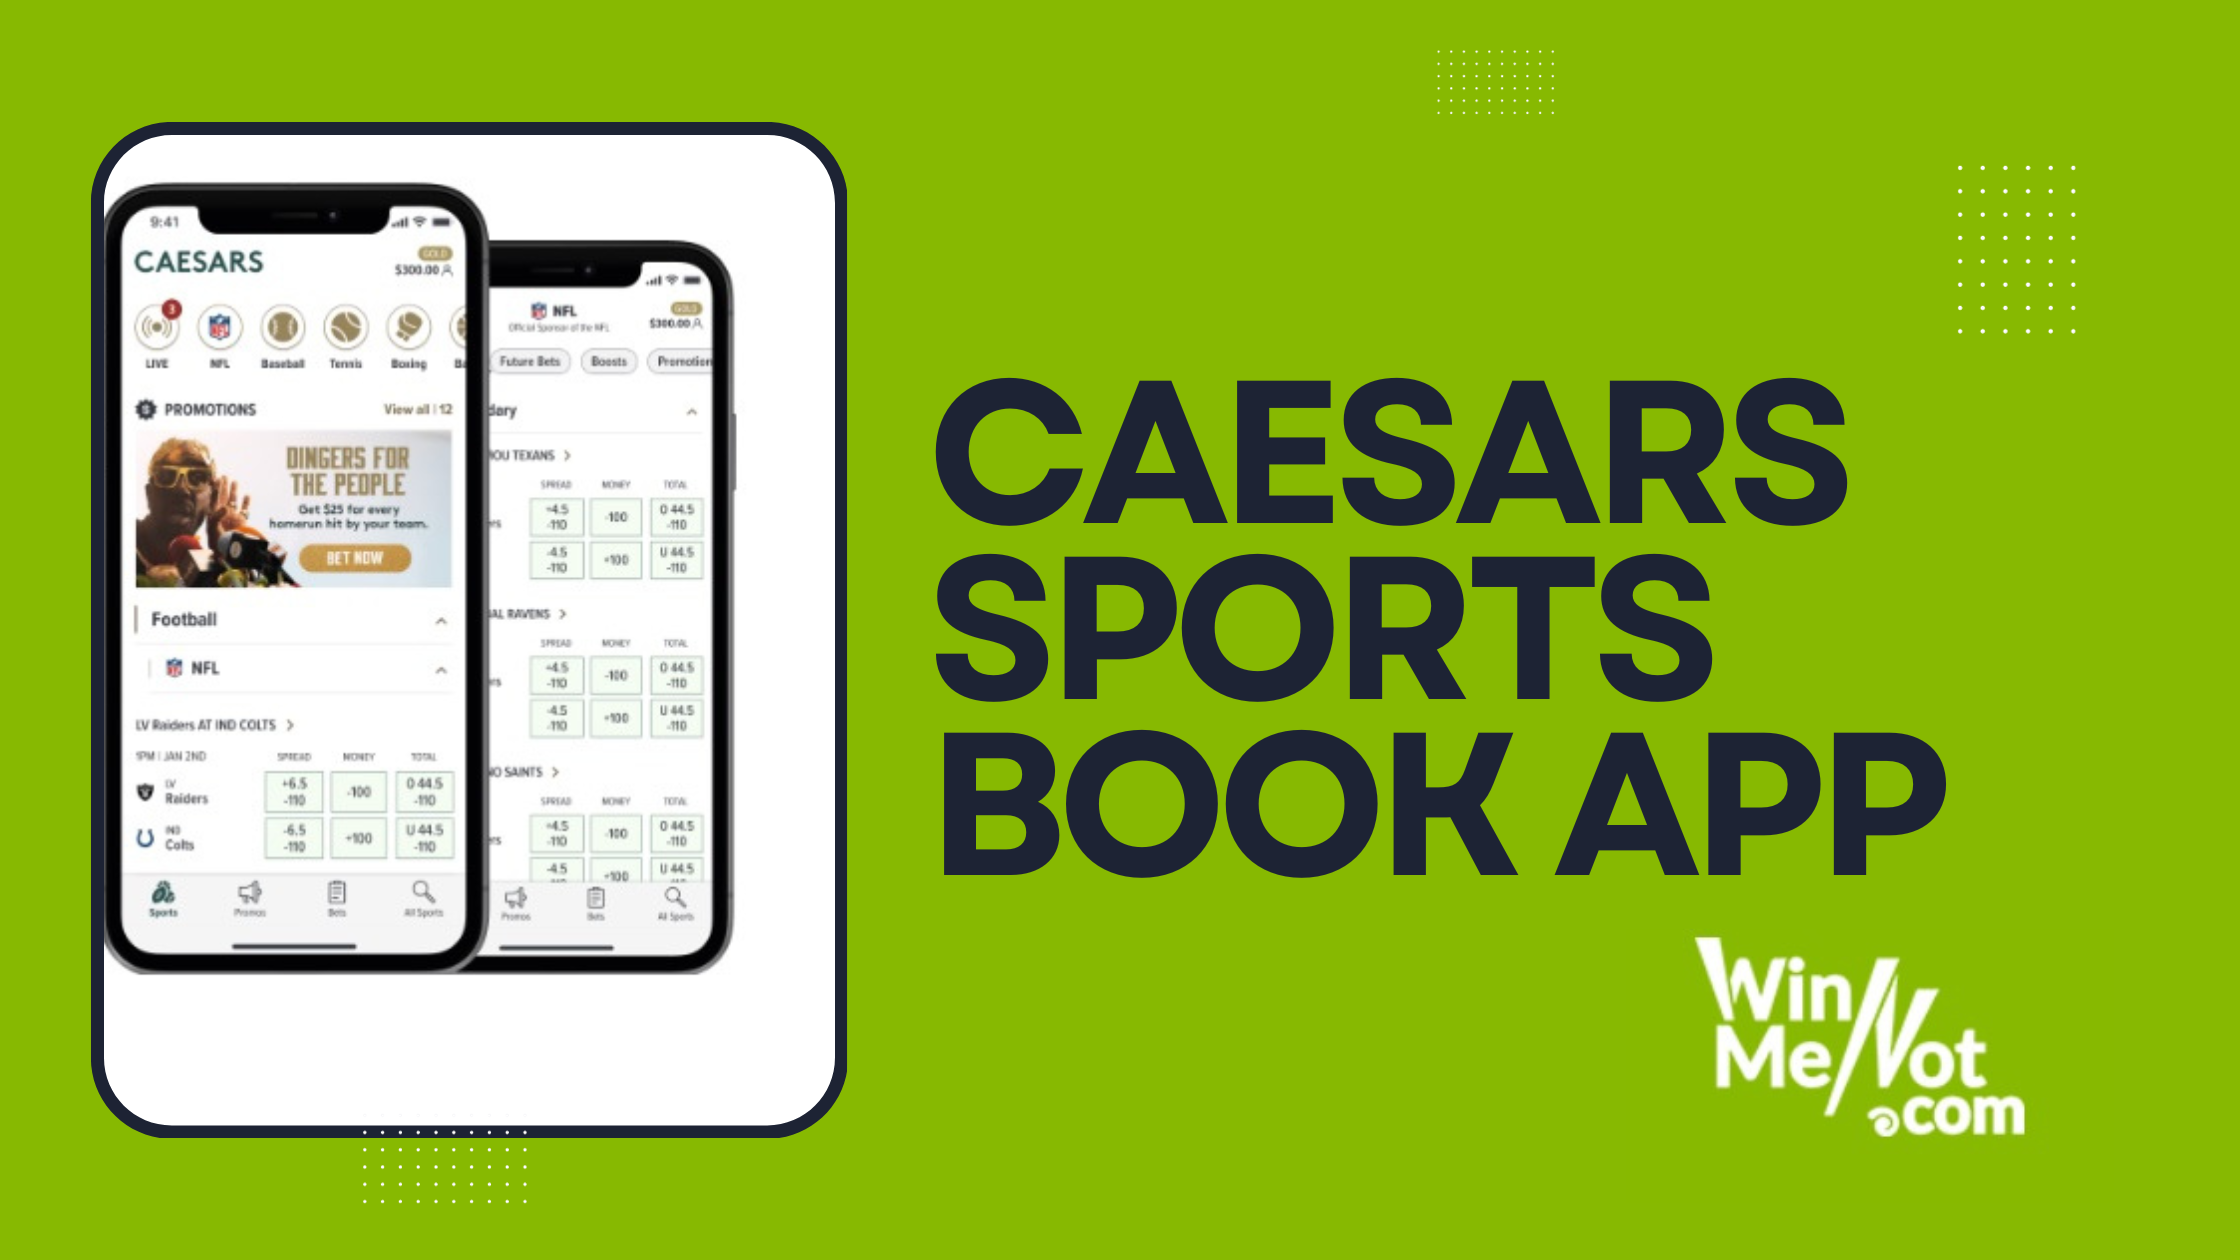 Caesars Sports Book App